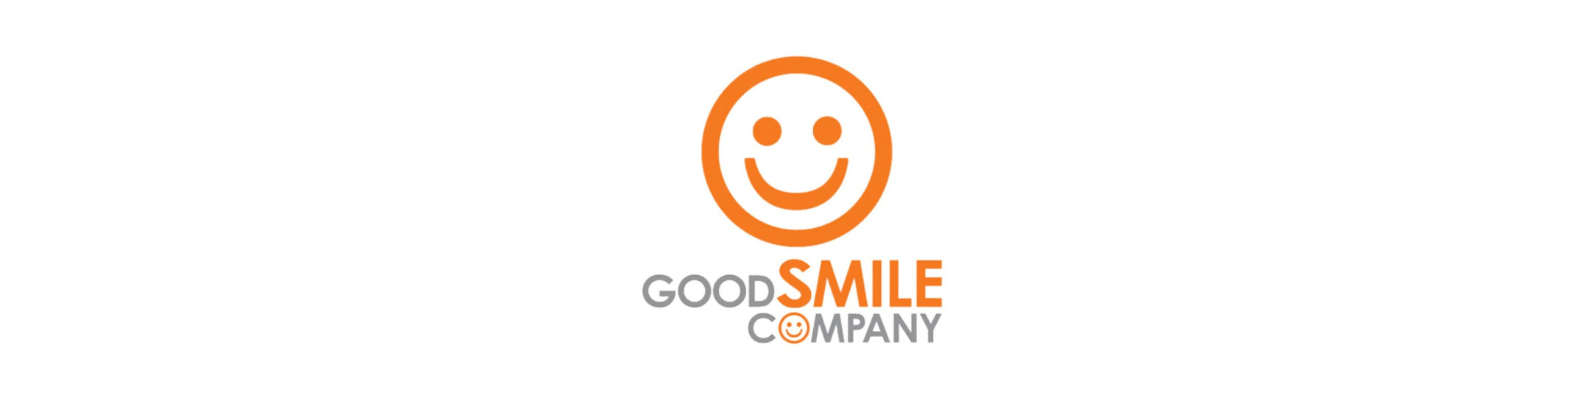 Banner Good Smile Company